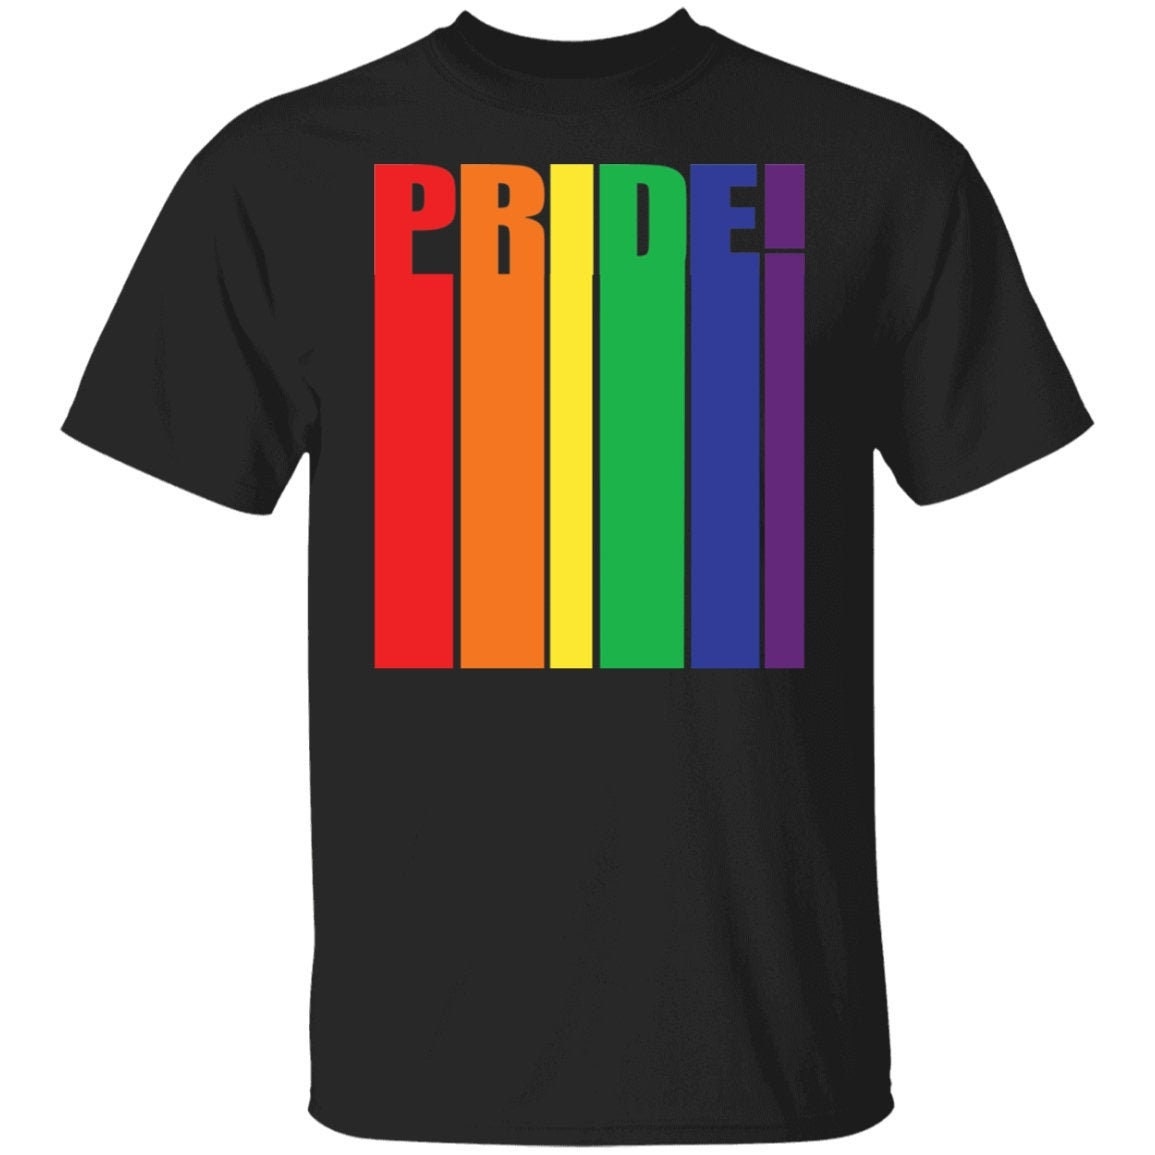 Gay Pride shirt with rainbow pride colors pride shirt | Etsy